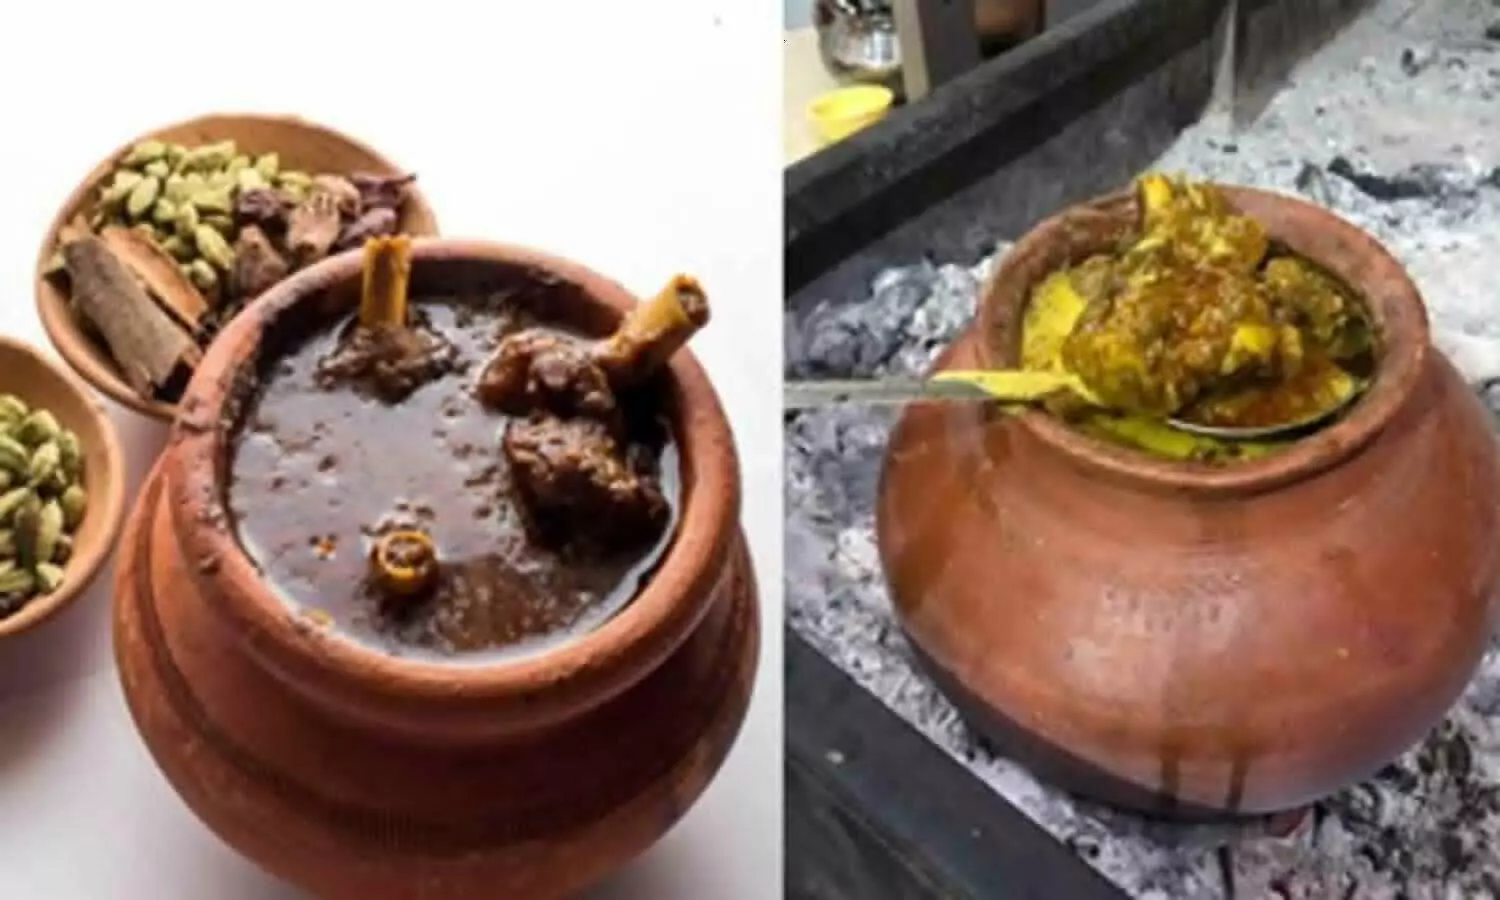 Recipe of Champaran Mutton Curry